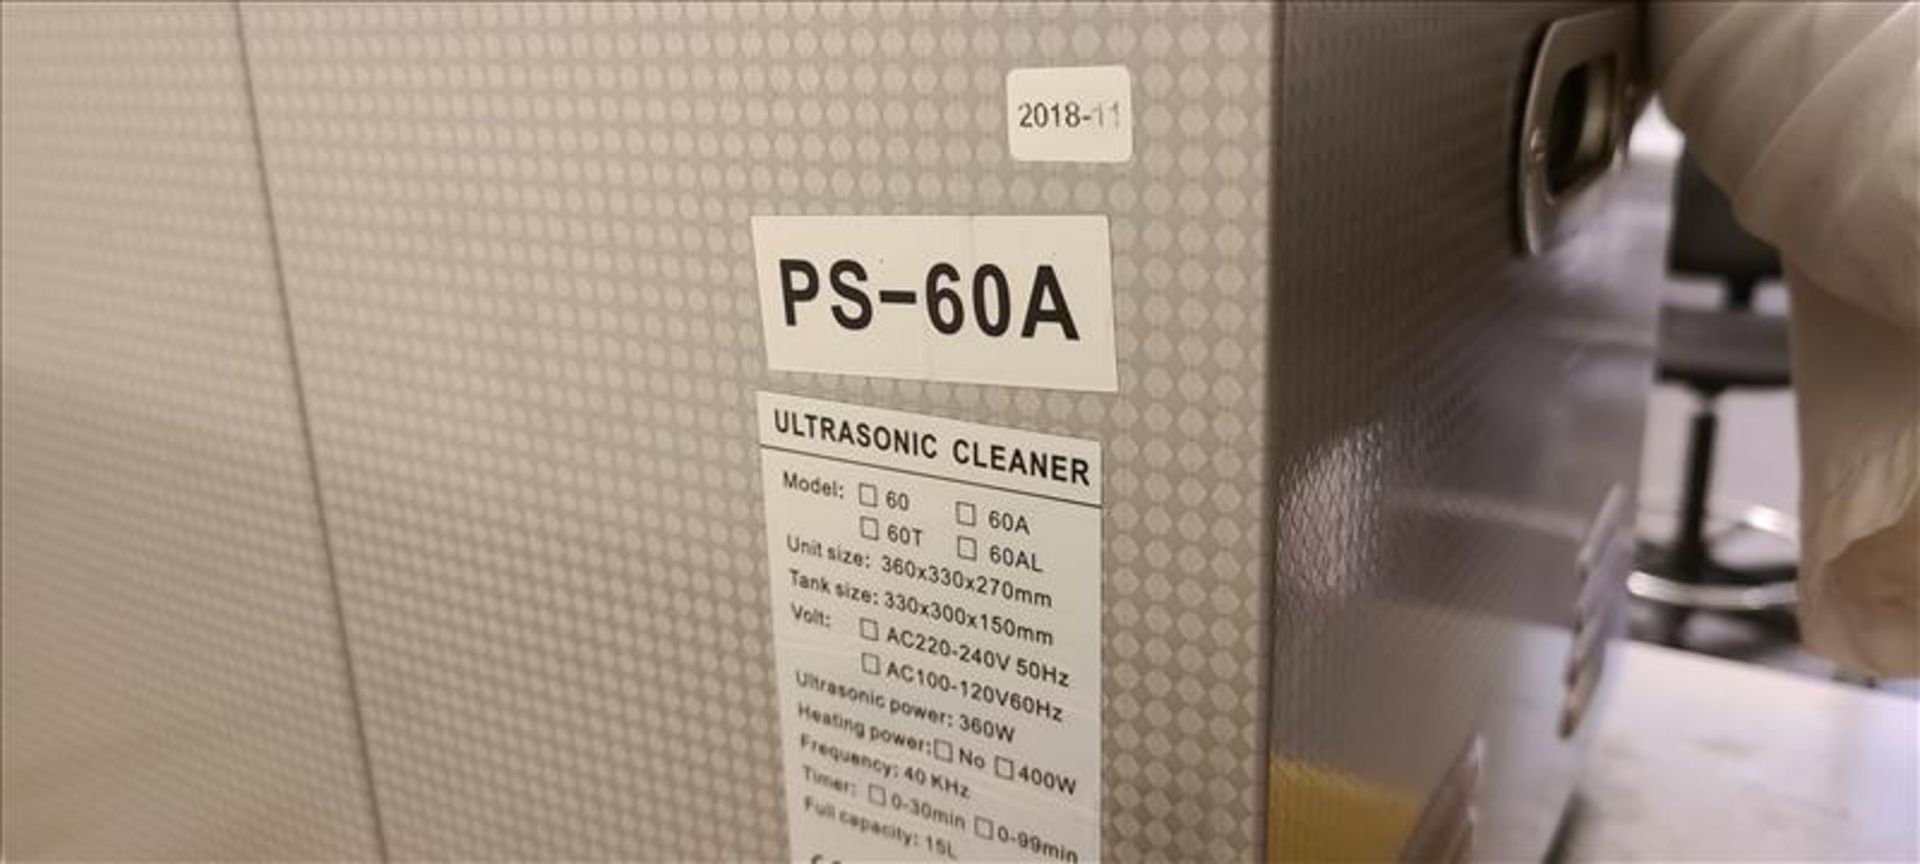 CO-Z Digital Ultrasonic Cleaner, model PS-60A. - Image 2 of 2